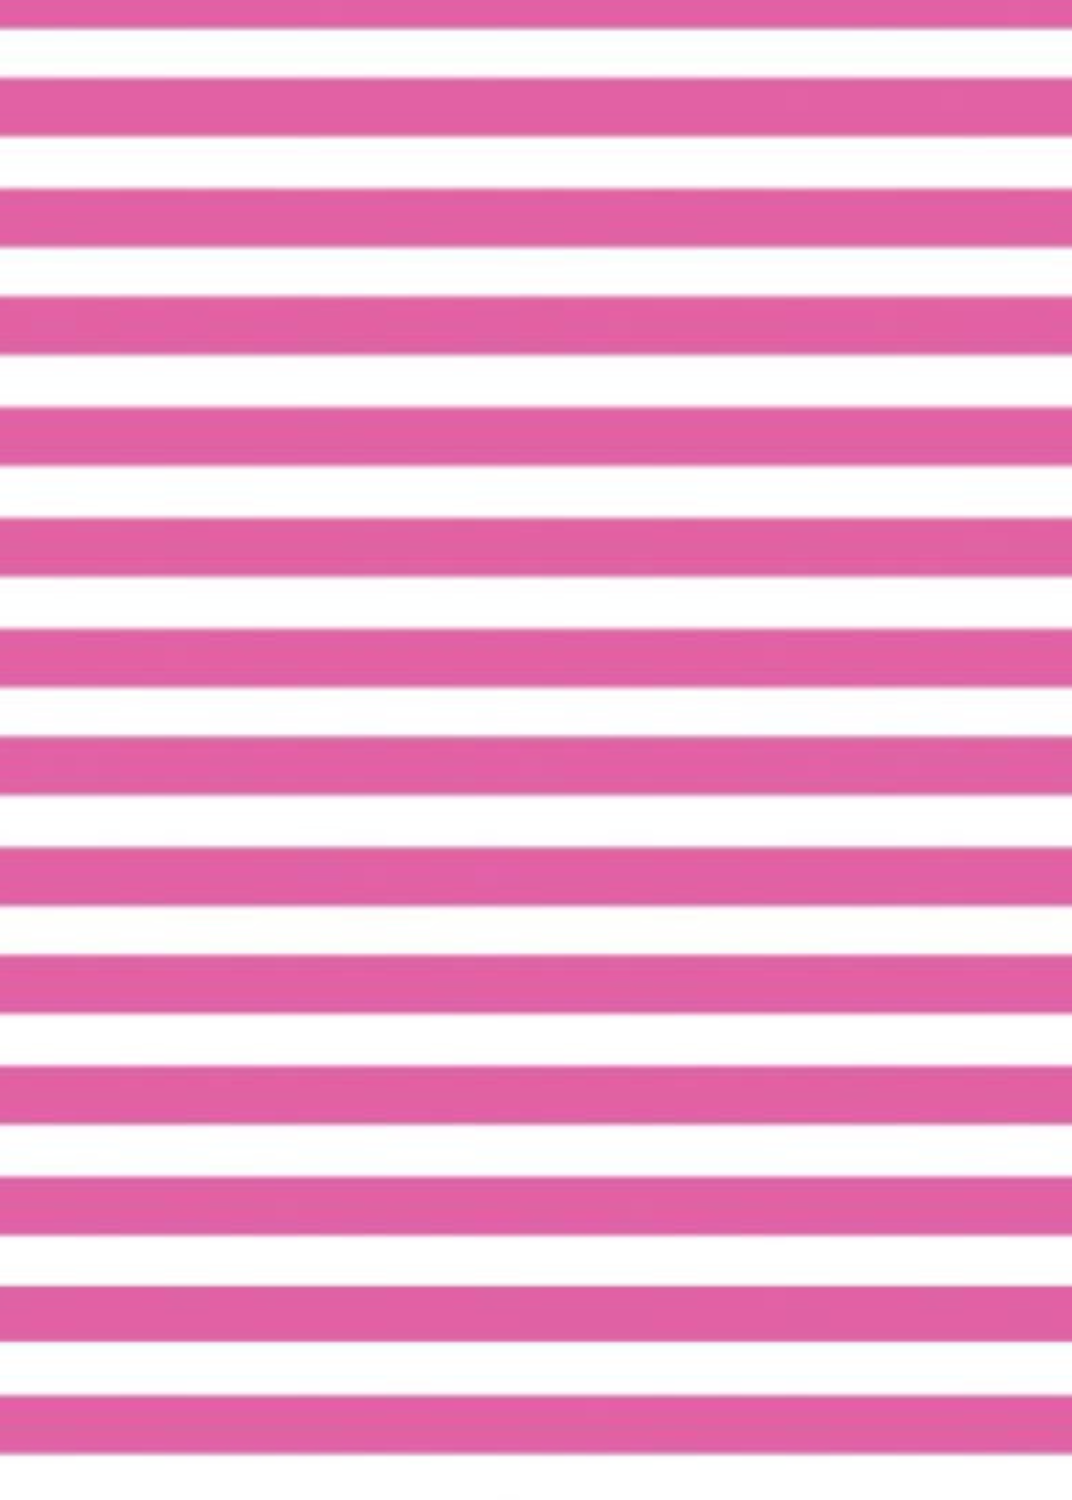 Marina Dress - Stripe, Hot Pink/White